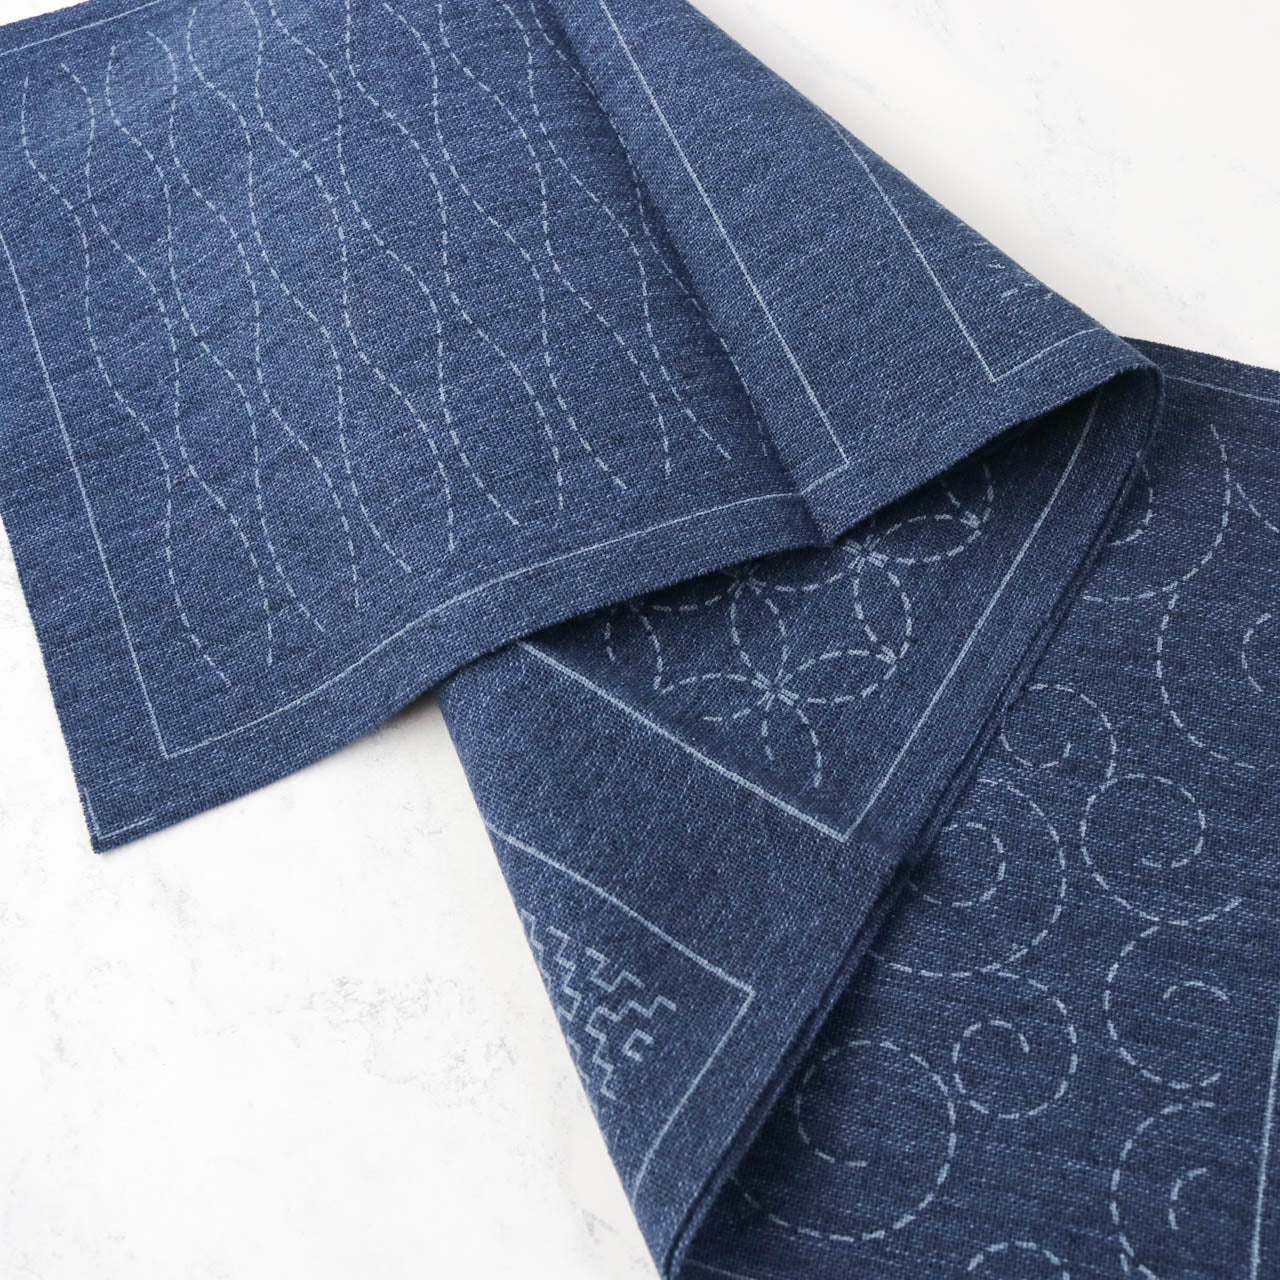 Pre-Printed Sashiko Fabric With Three Classic Patterns Sashiko Sampler Home  Decoration